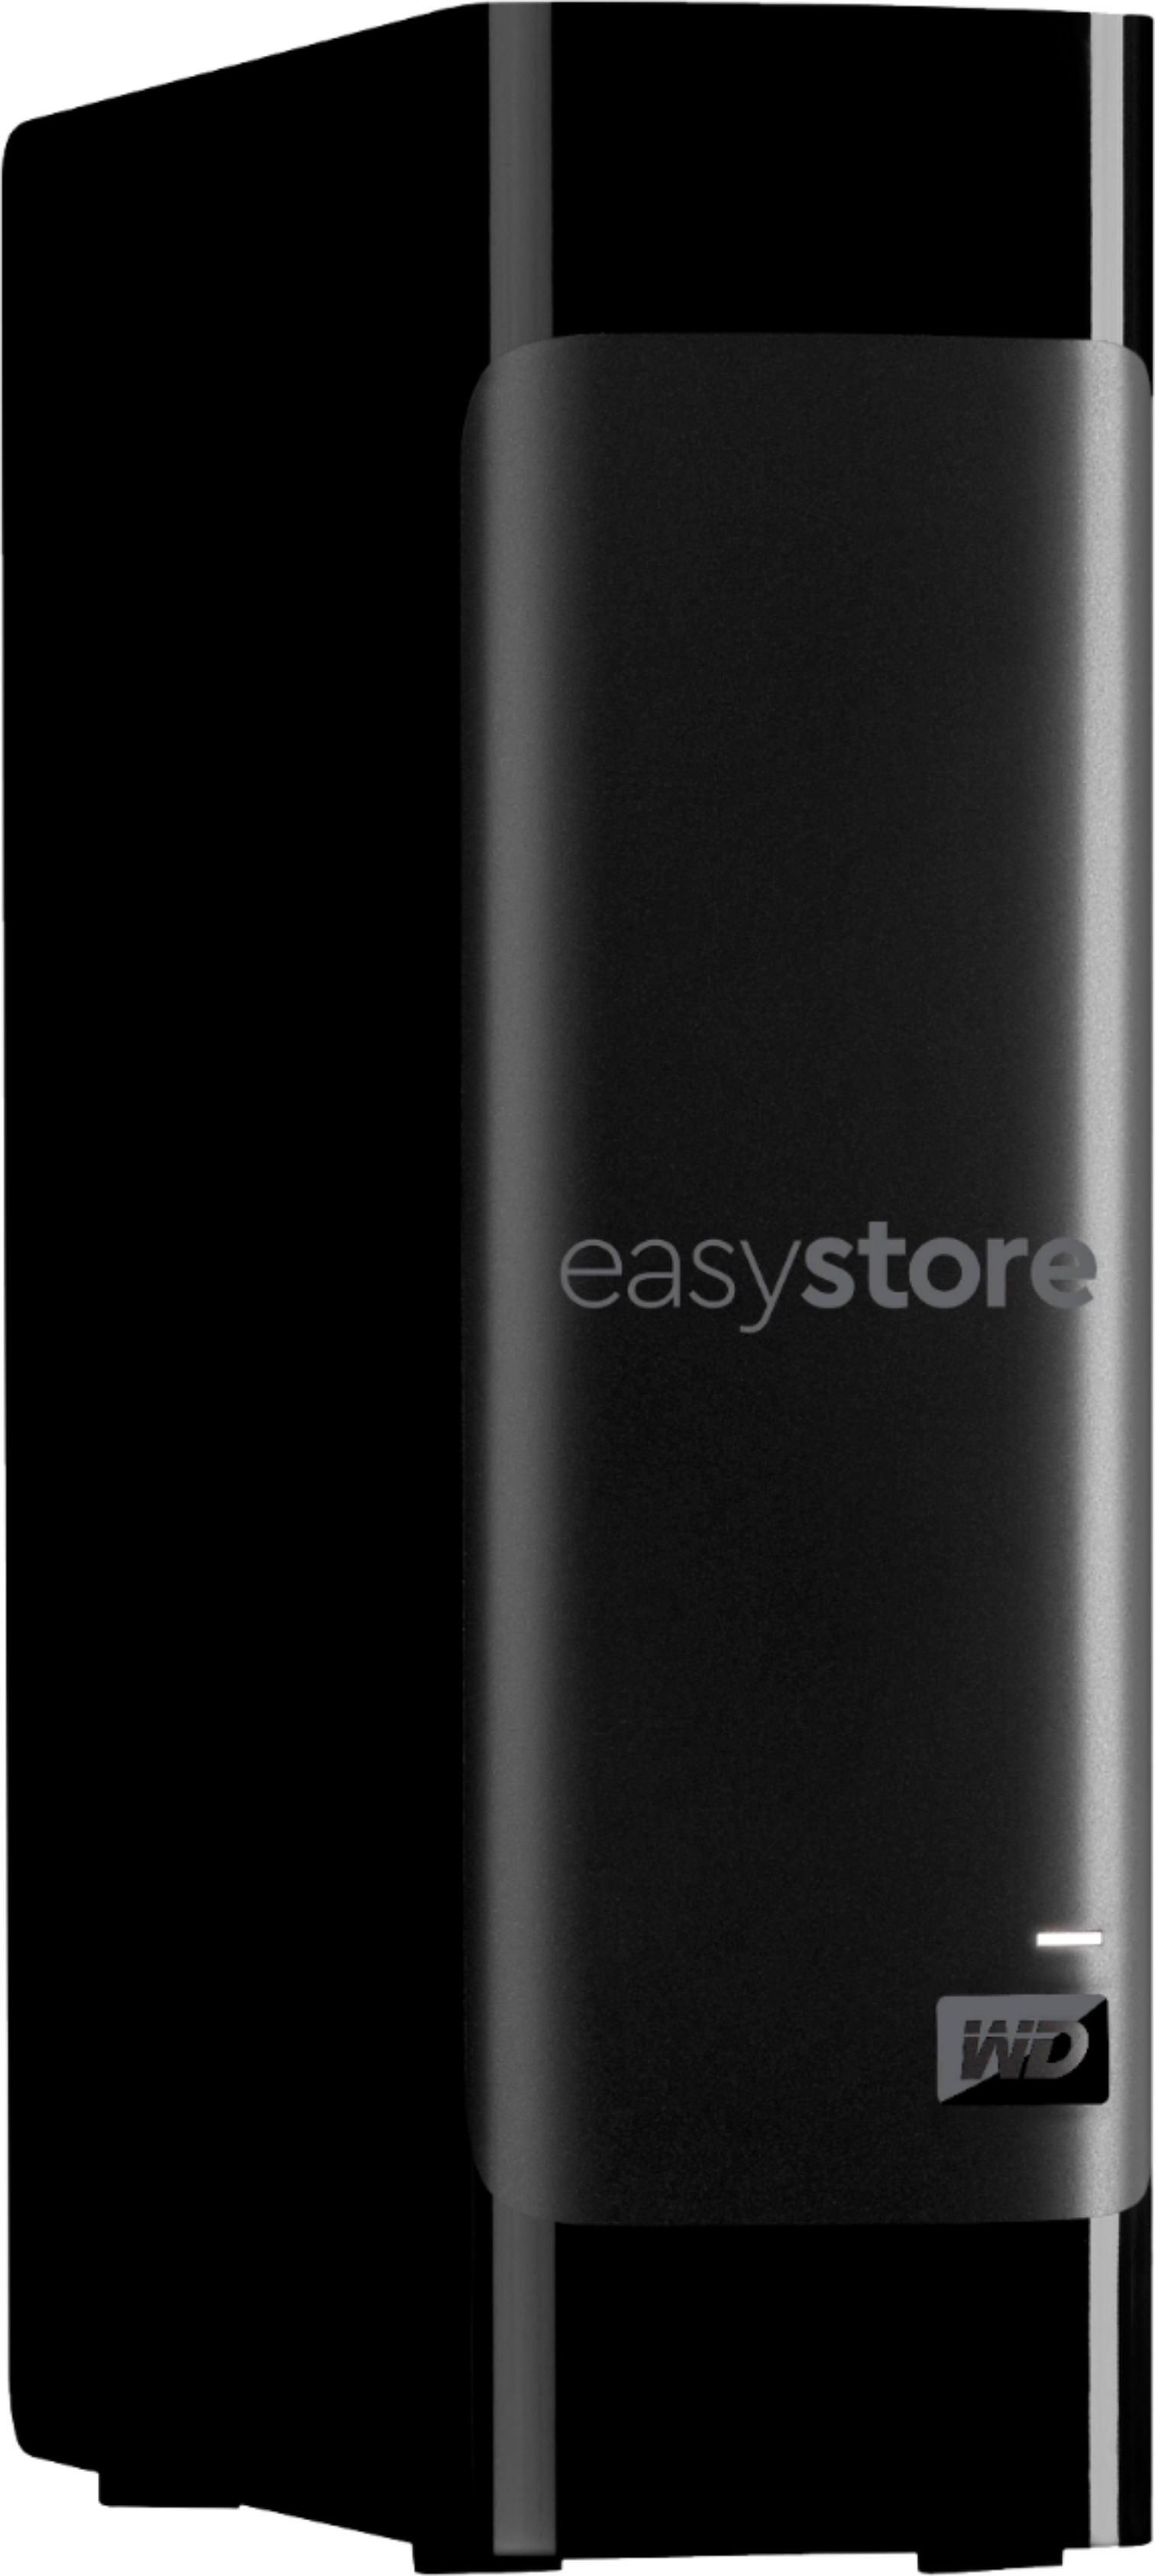 easystore - 14TB Hard WD Drive 3.0 USB External Buy WDBAMA0140HBK-NESN Best Black